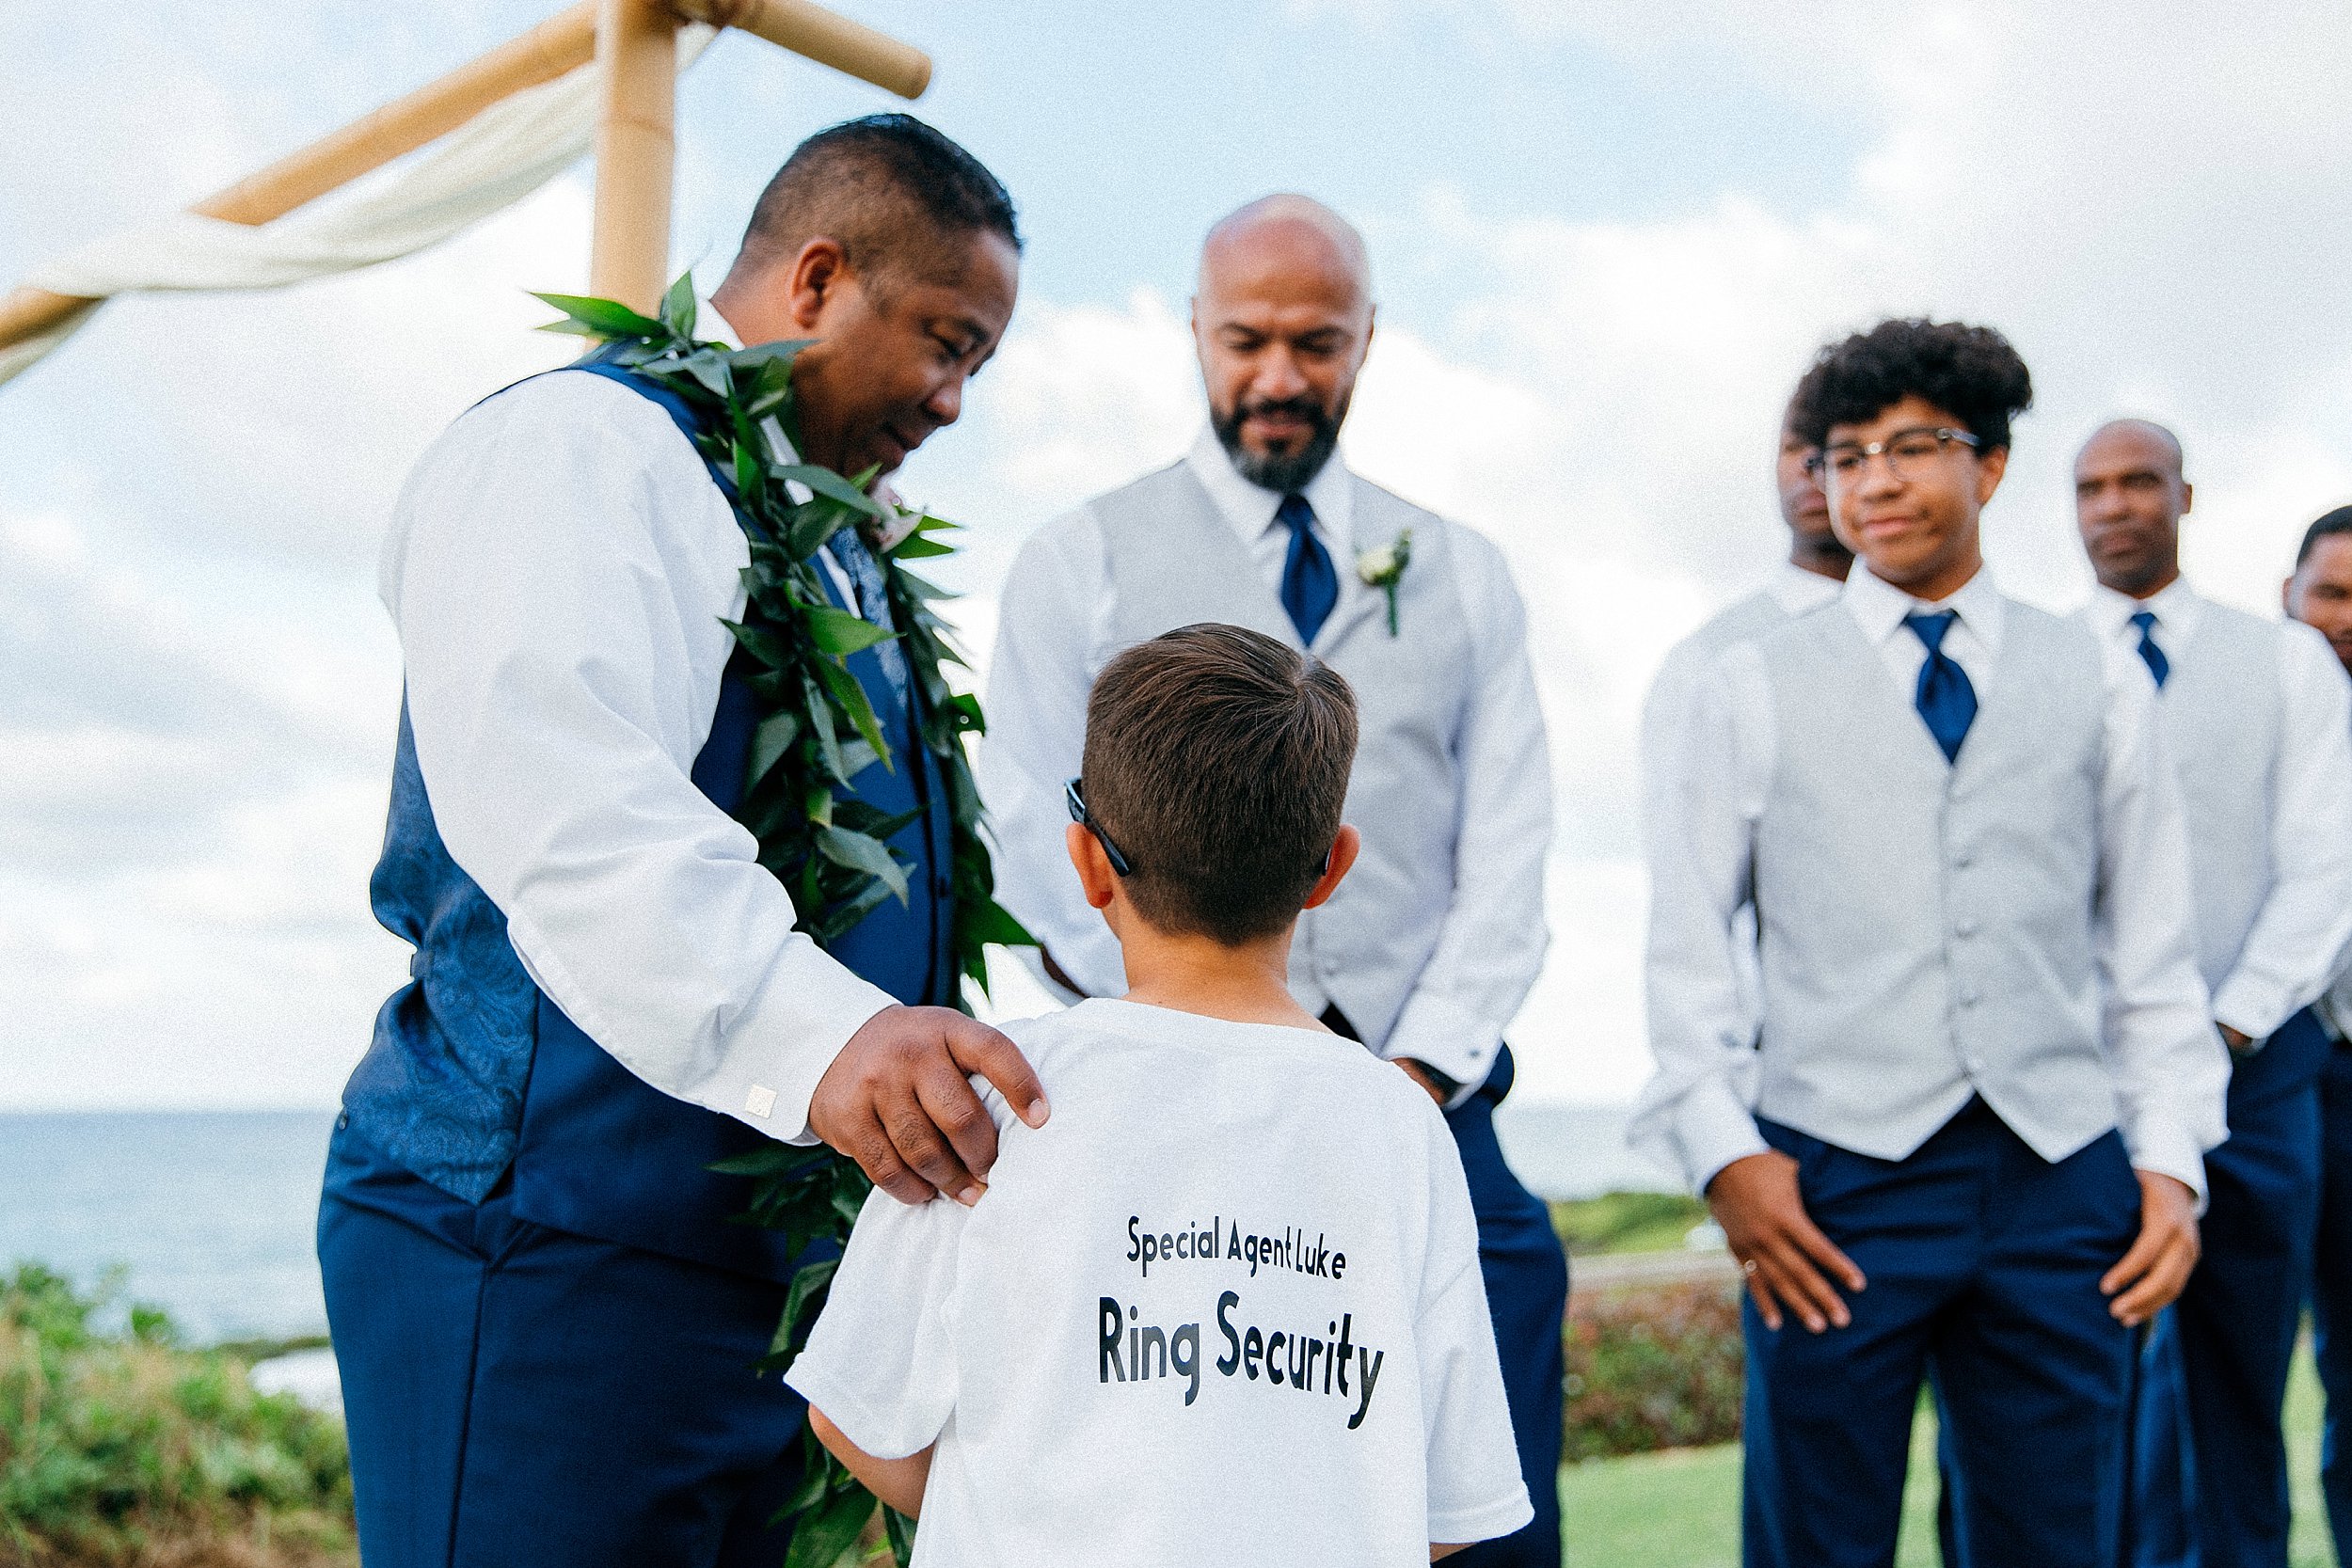  Hawaii Wedding at Sea Life Park and Makapuu Lookout 